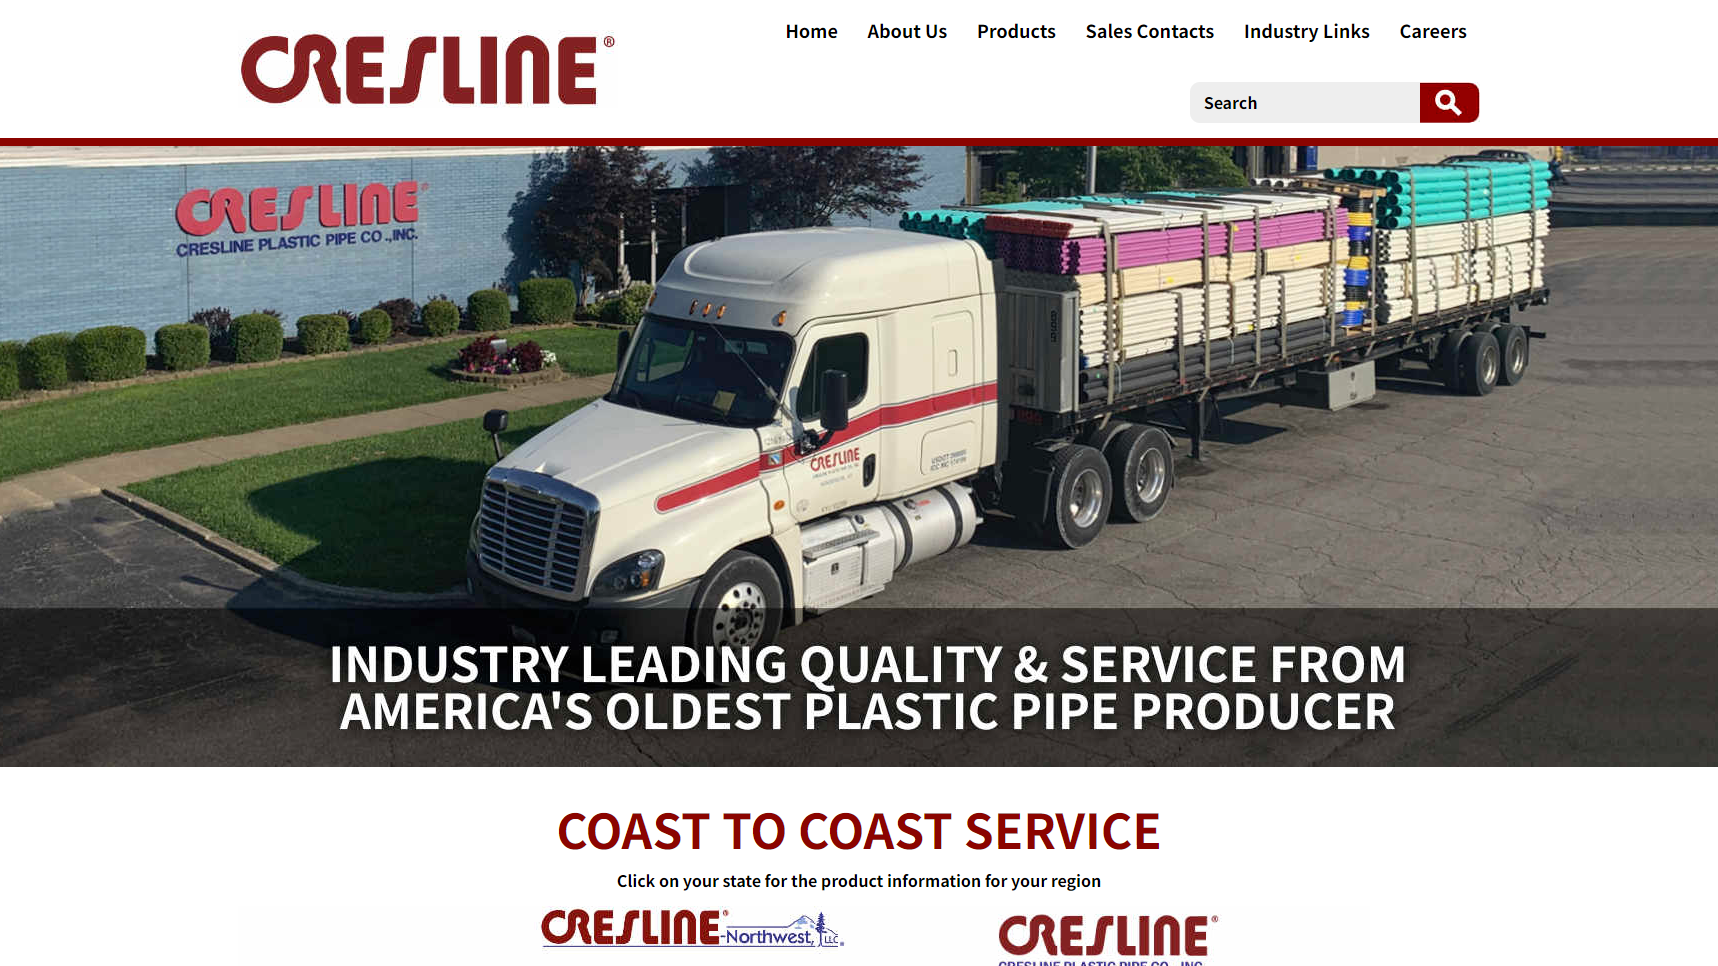 Cresline Plastic Pipe Co. - PVC Conduit Manufacturer